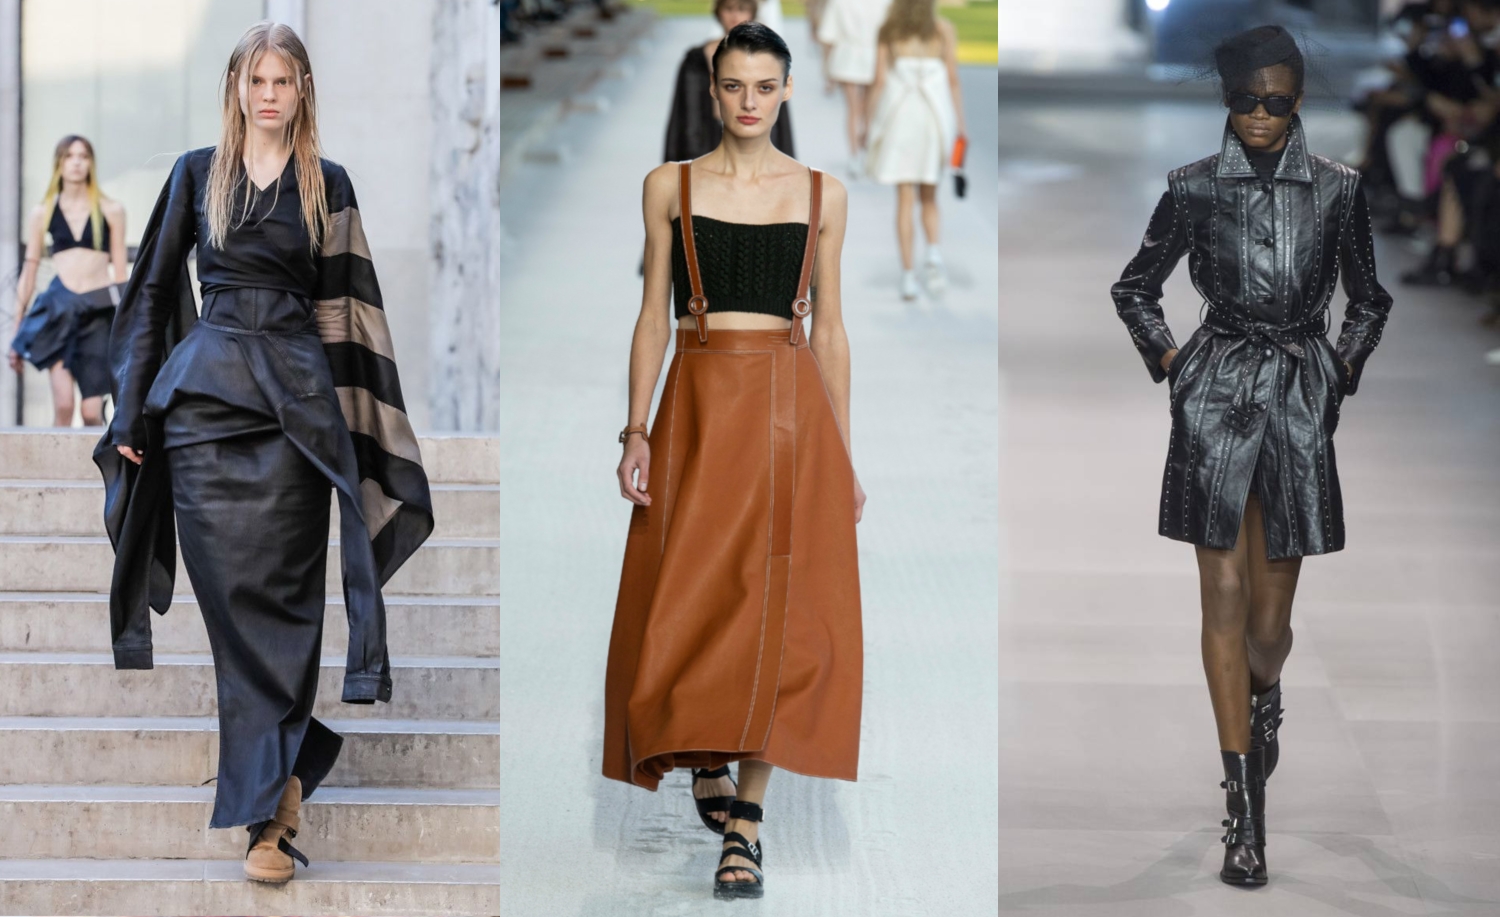 FW 2019 fashion edgy looks leather rick owens hermes celine